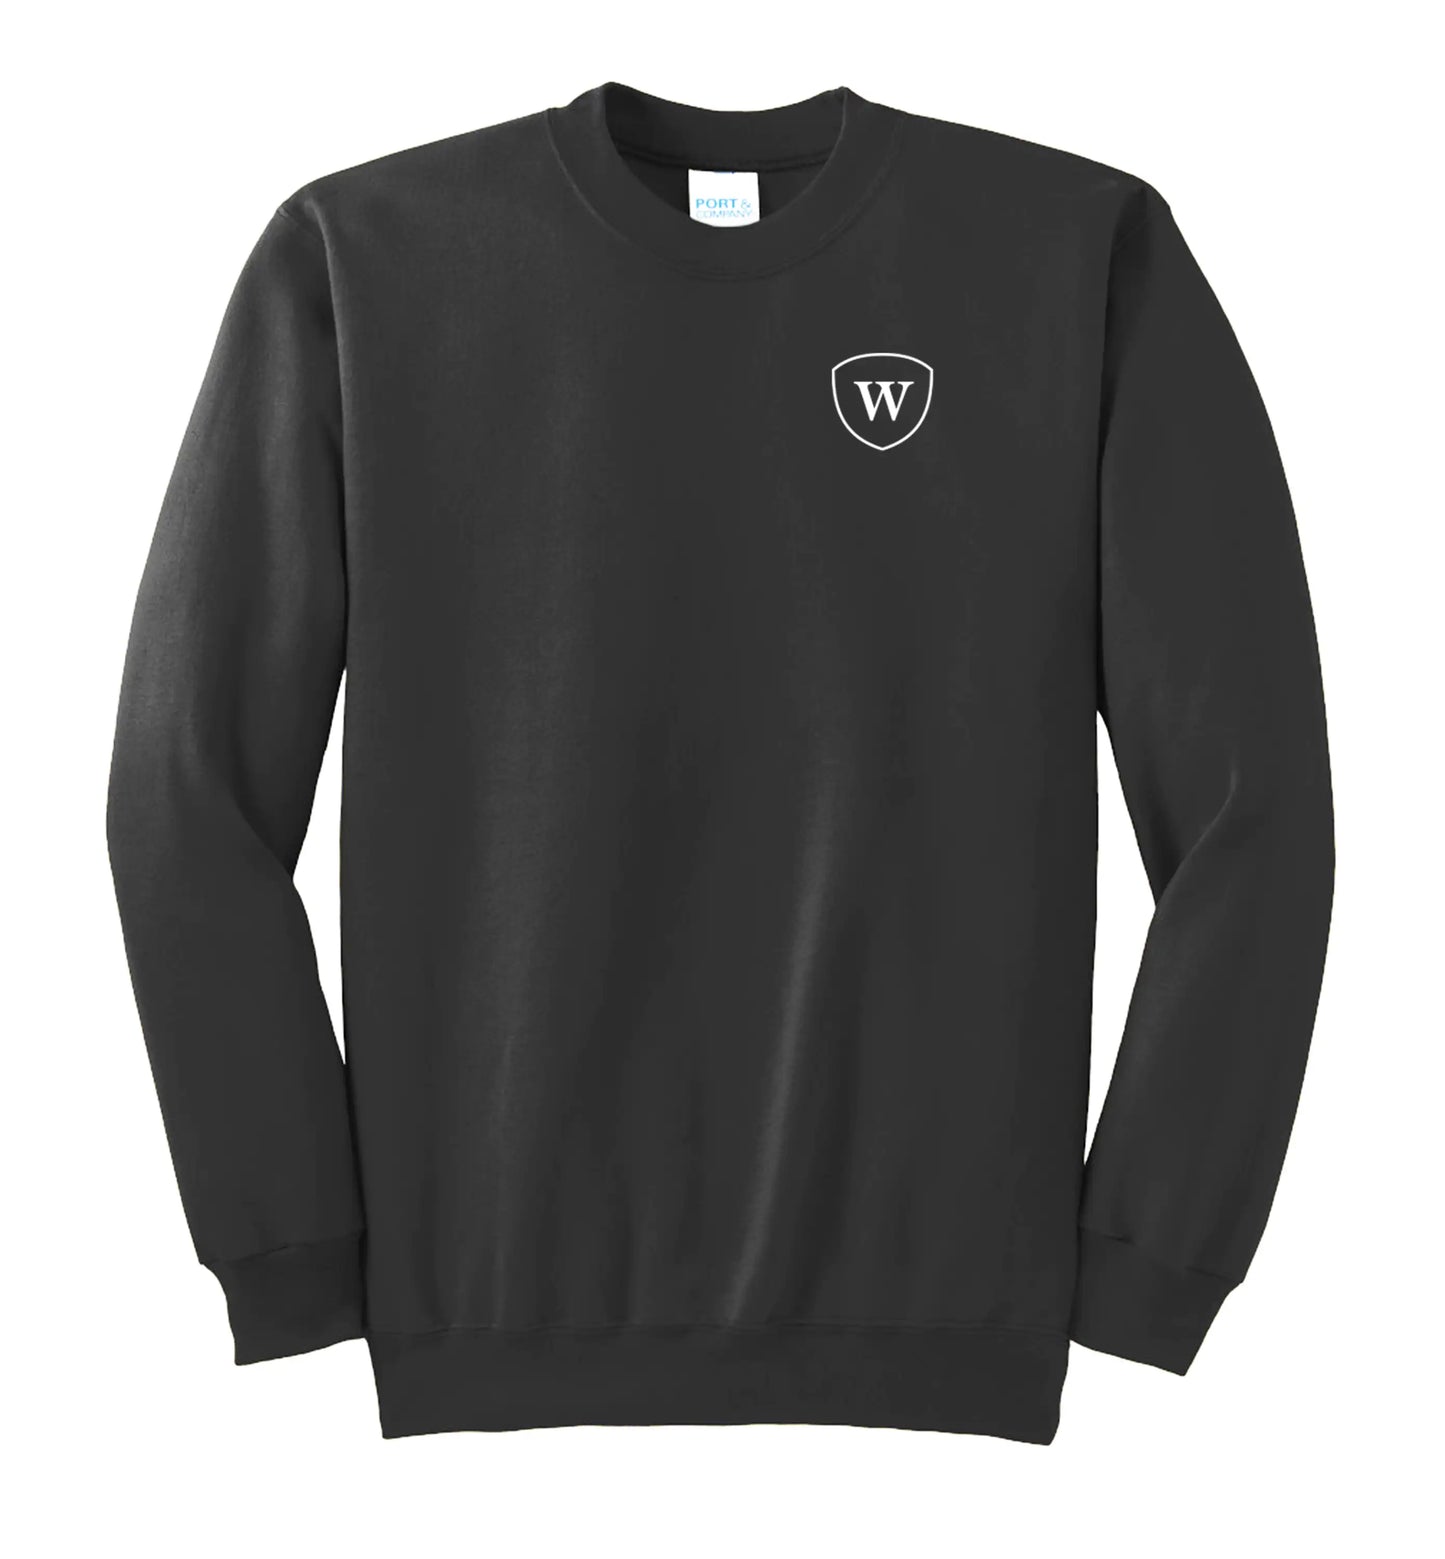 Port & Co Uniform-Approved Sweatshirt